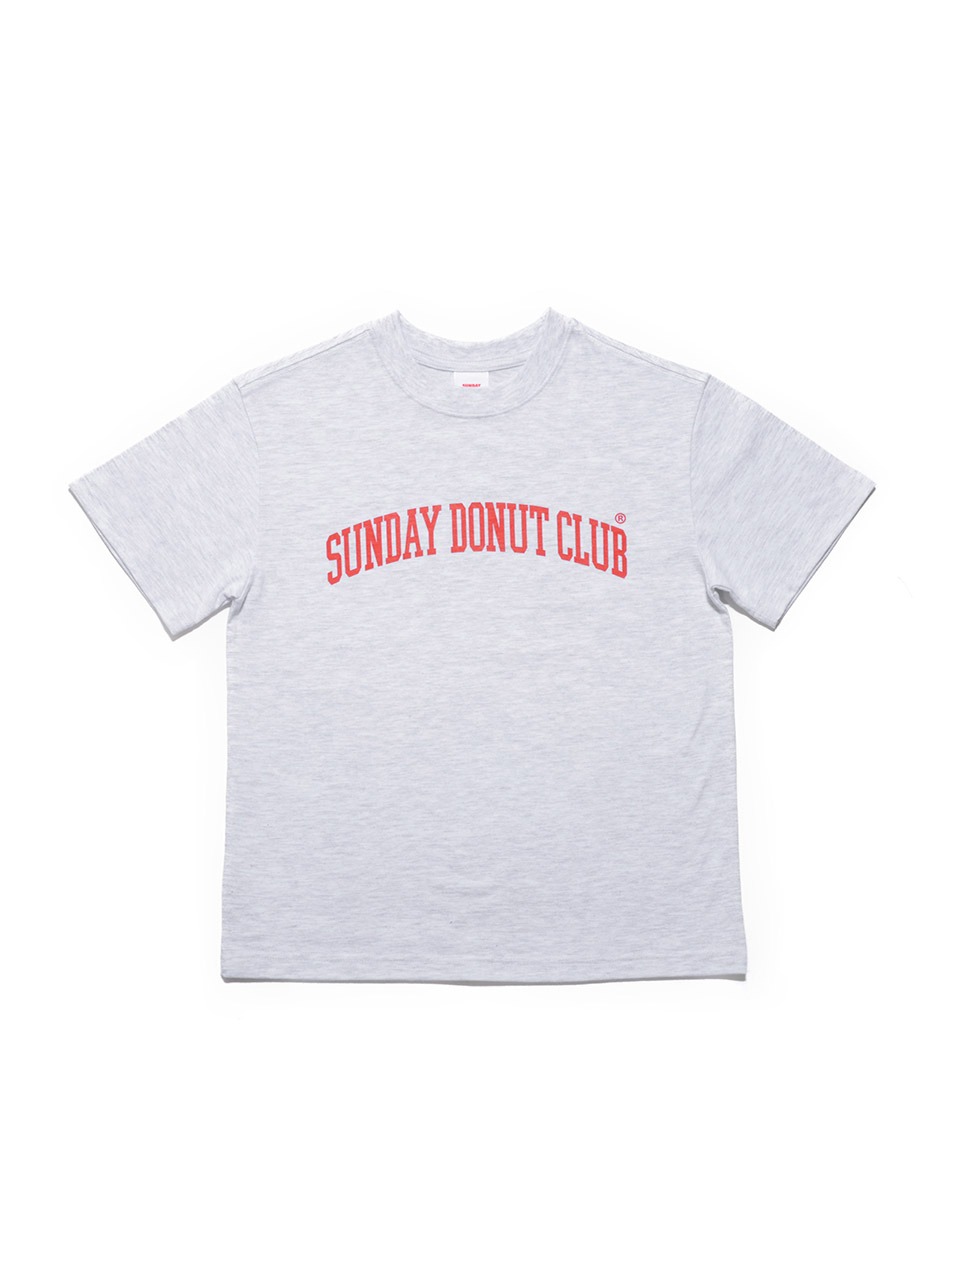 SUNDAY DONUT CLUB TEE [Light Grey]